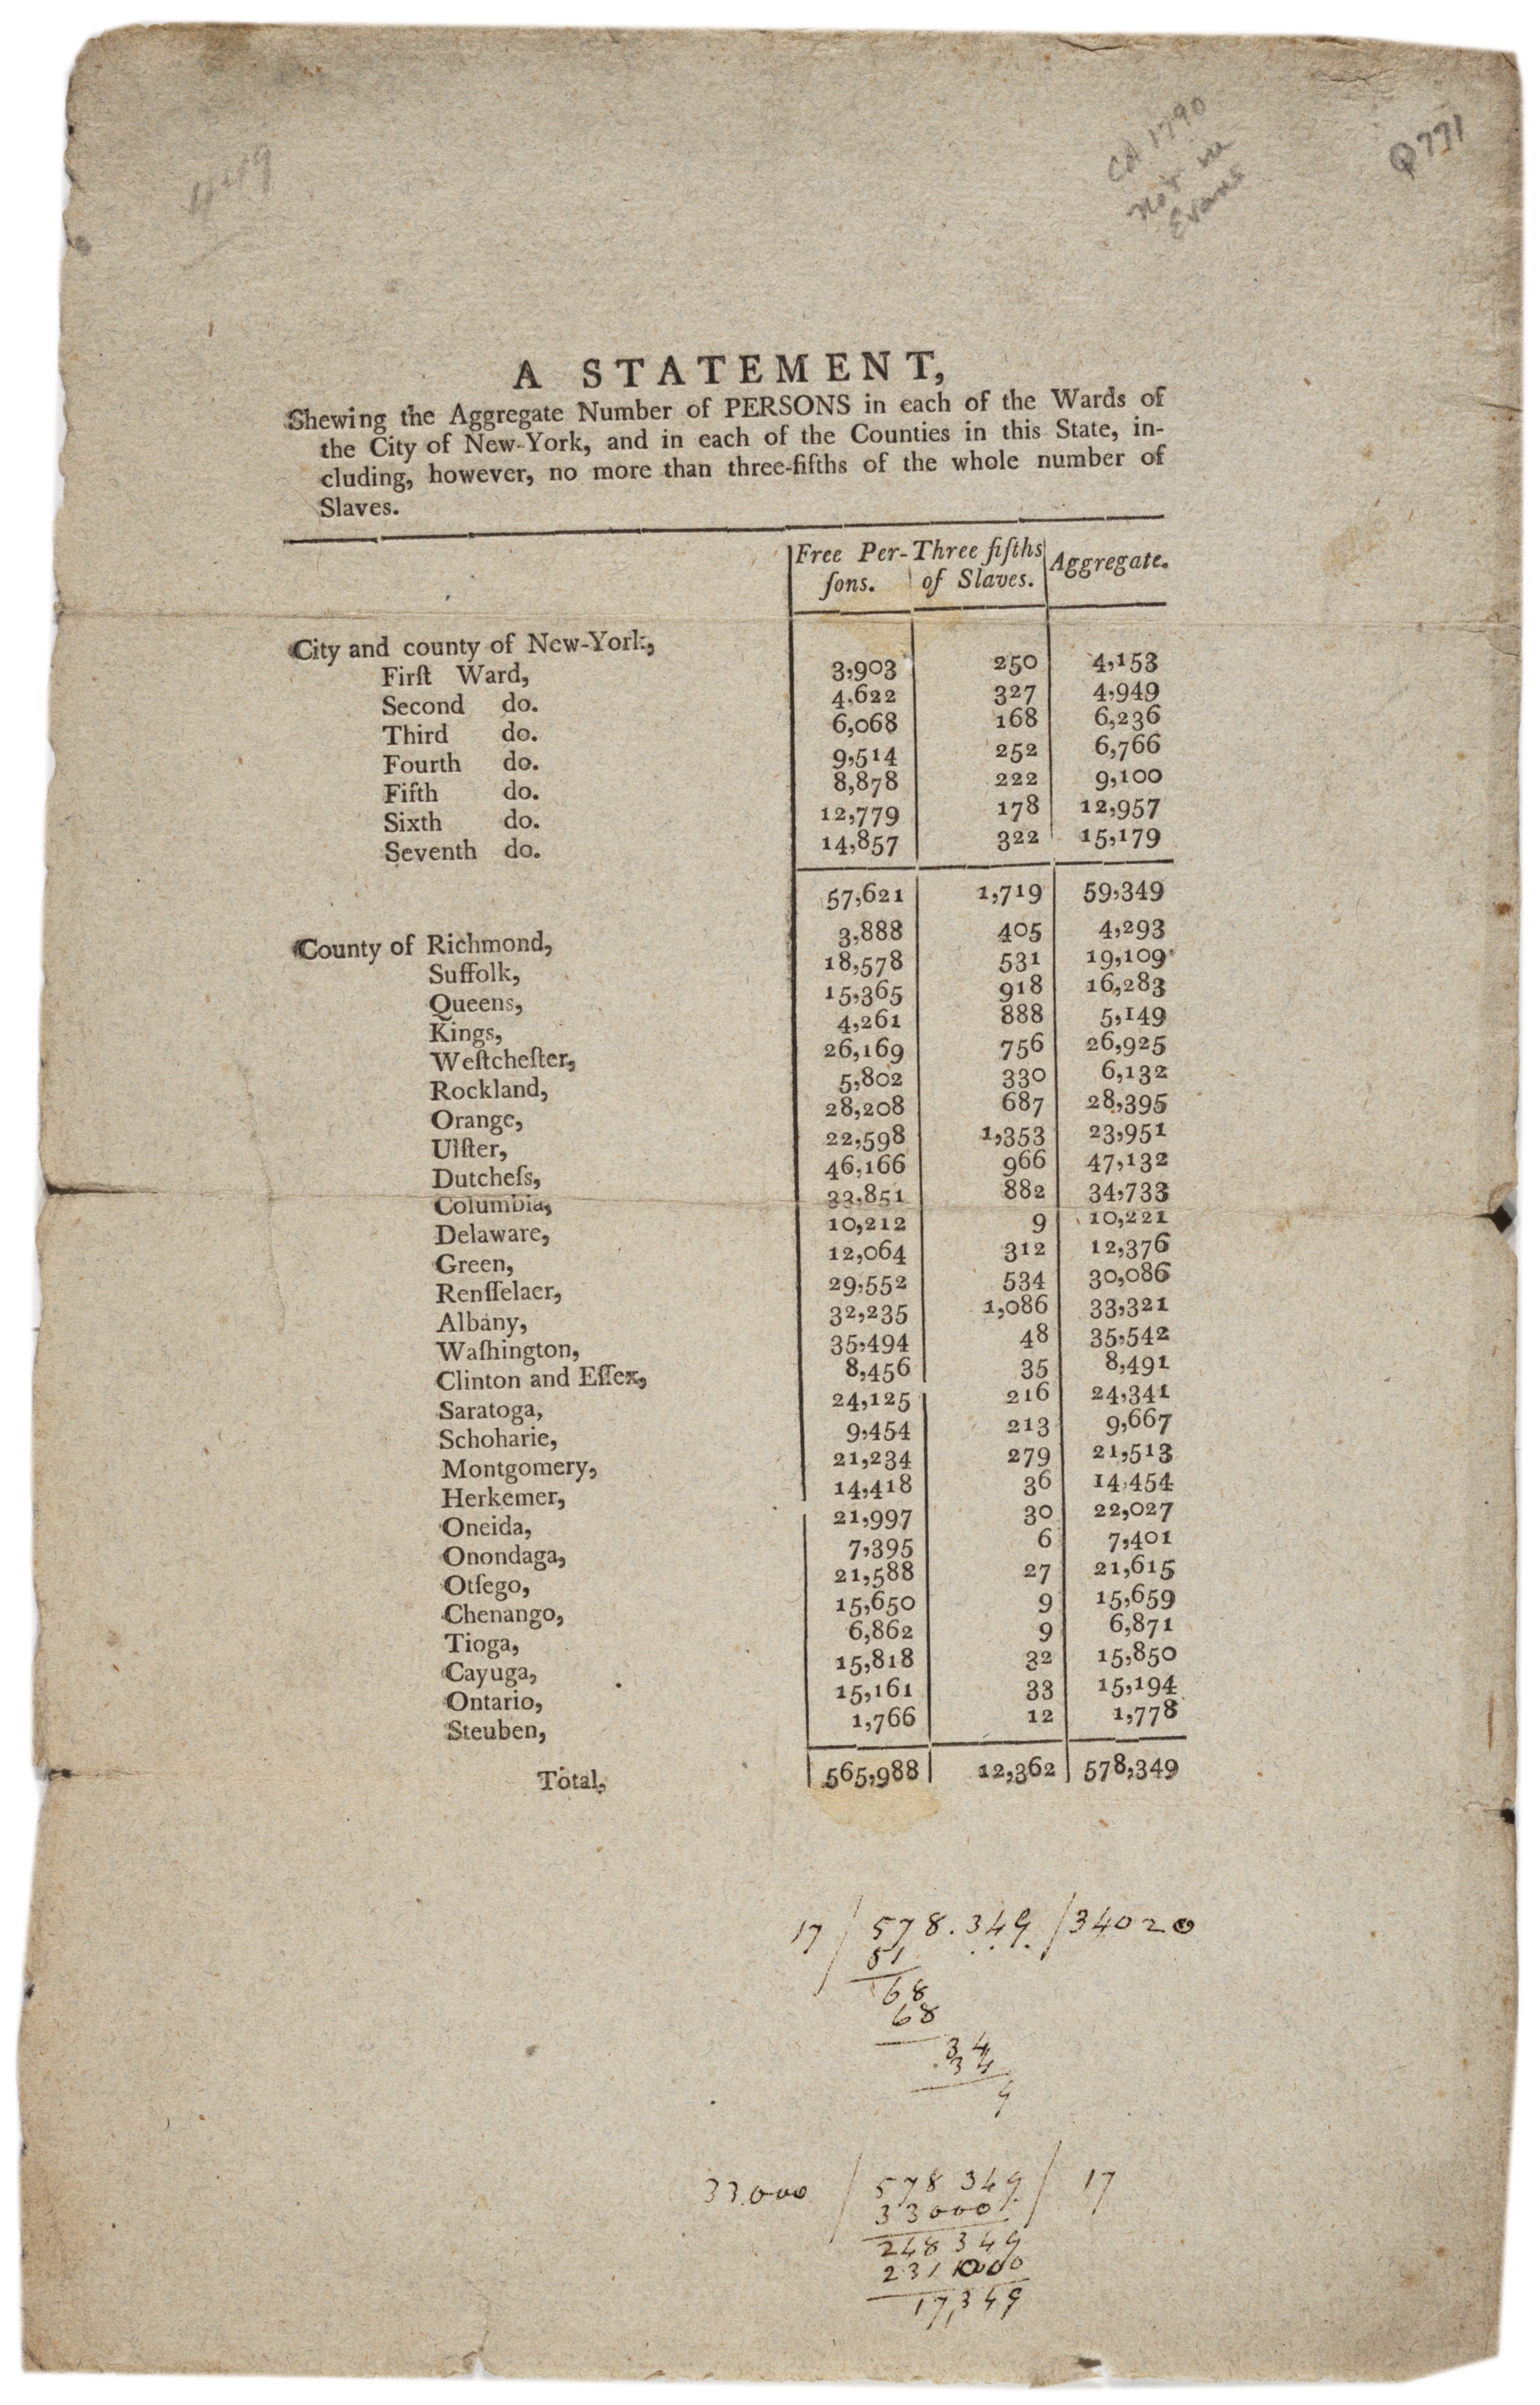 Census results, New York State, ca. 1800 (Gilder Lehrman Institute, GLC08893)